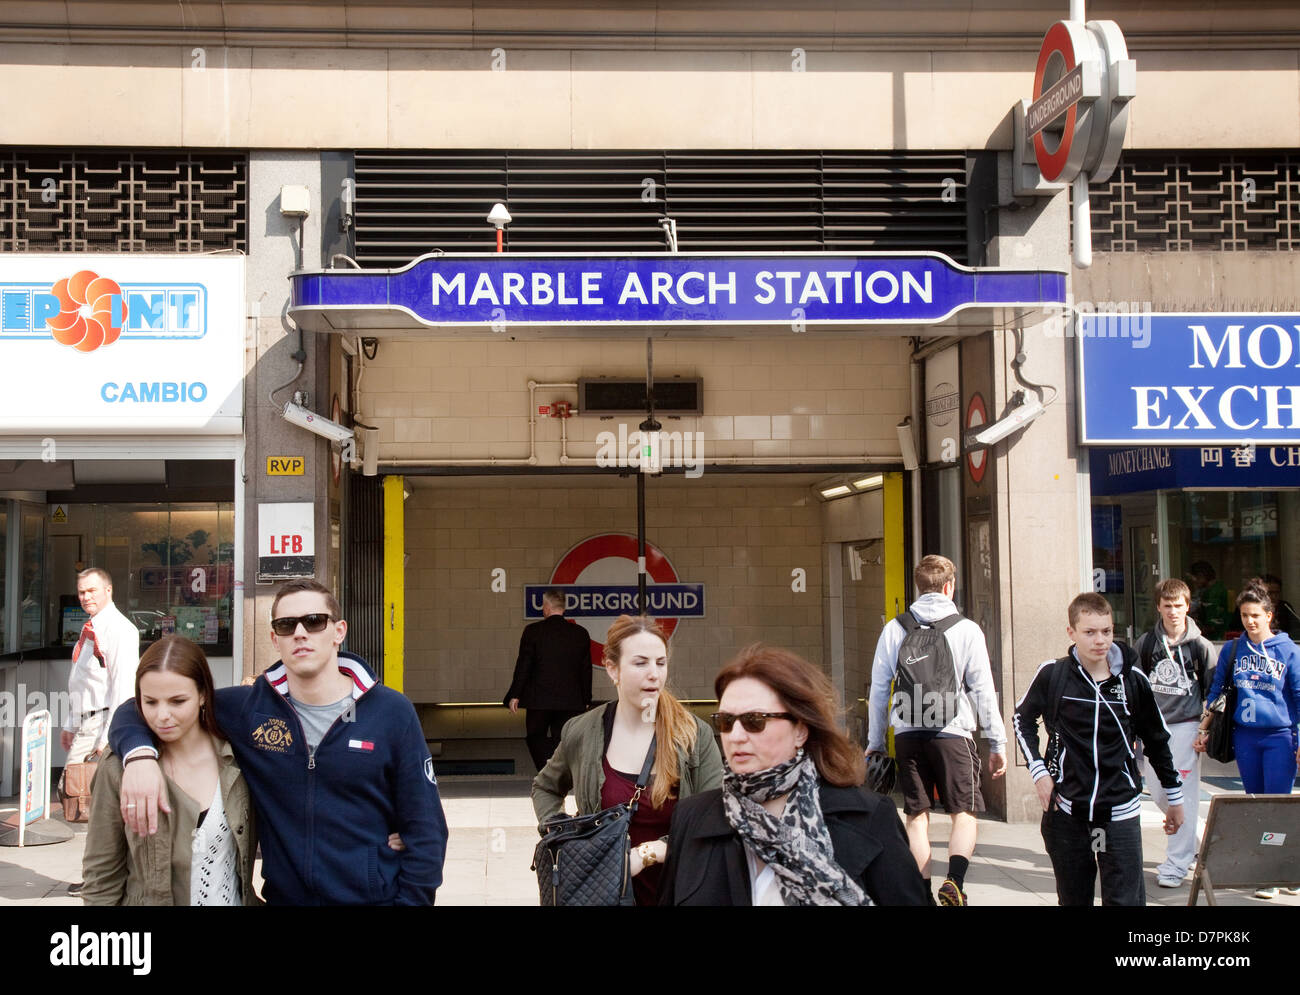 Marble Arch London Underground tube station, central London, Regno Unito Foto Stock